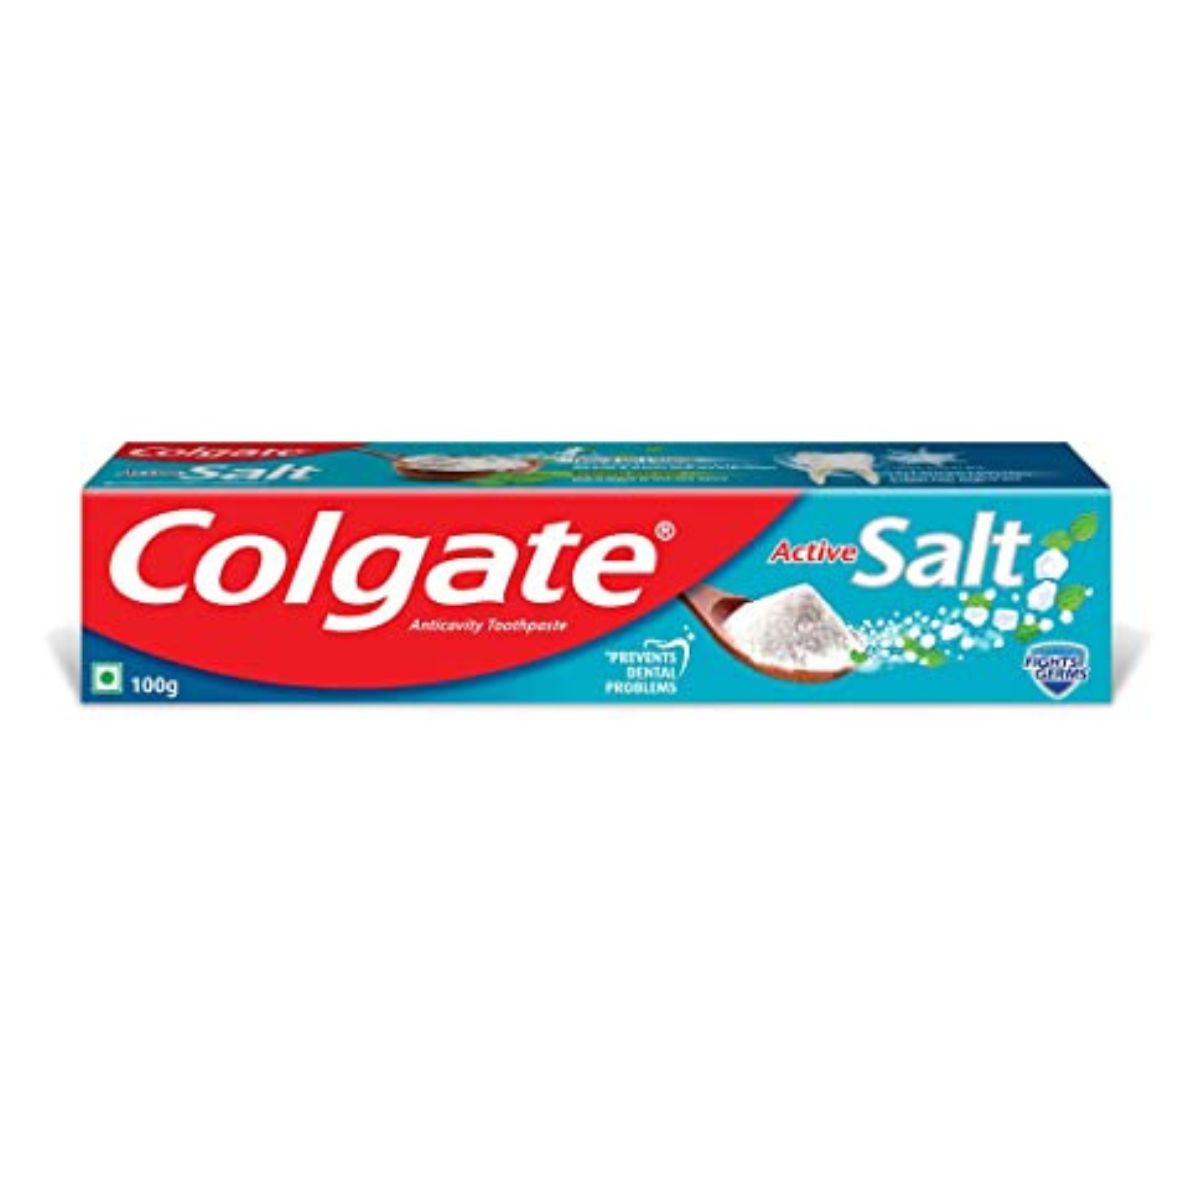 Colgate Anticavity Toothpaste - Active Salt - Prevents Dental Problems - 100g + 15g